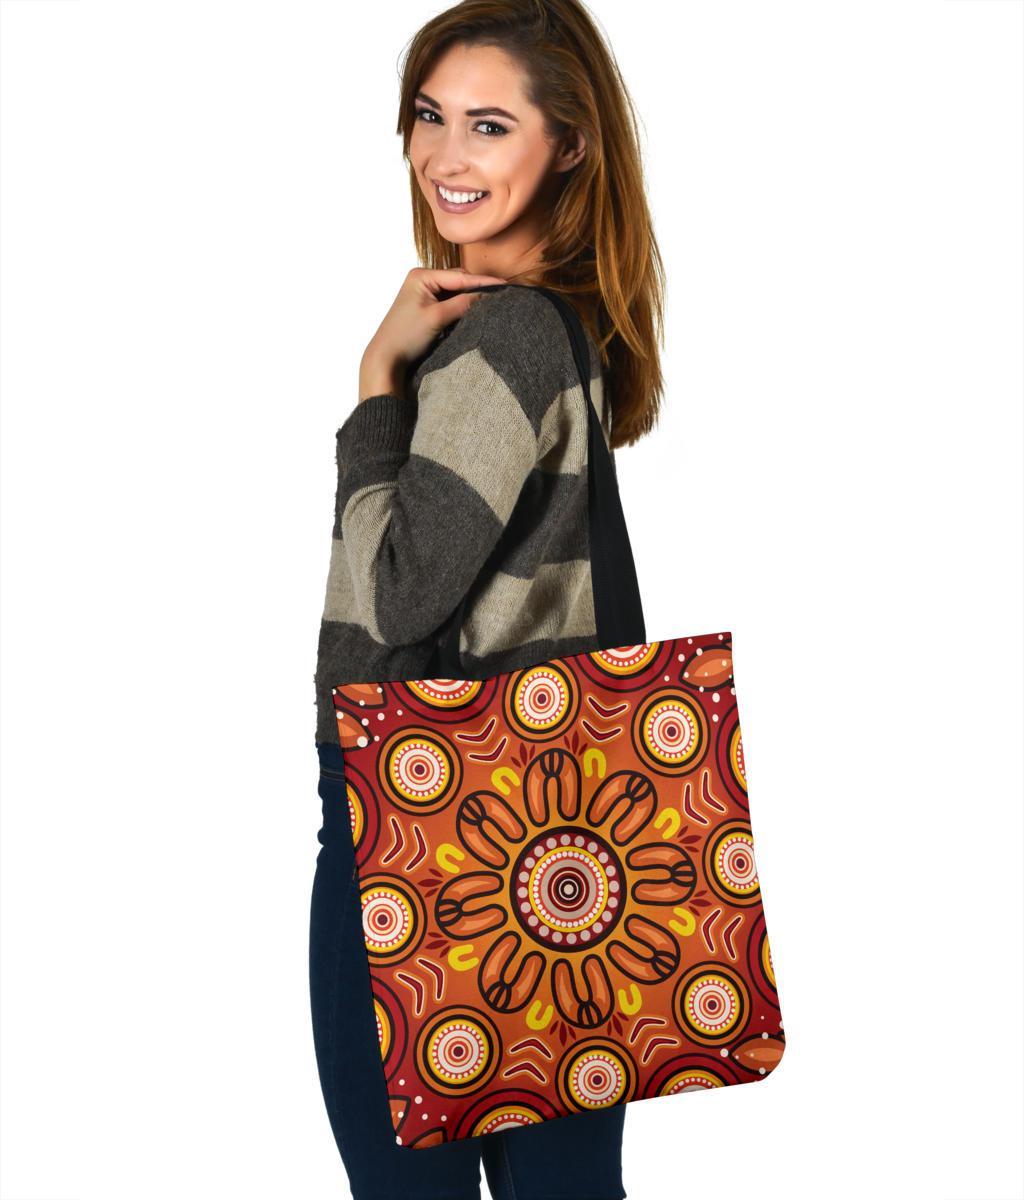 aboriginal-tote-bags-circle-flowers-patterns-ver01